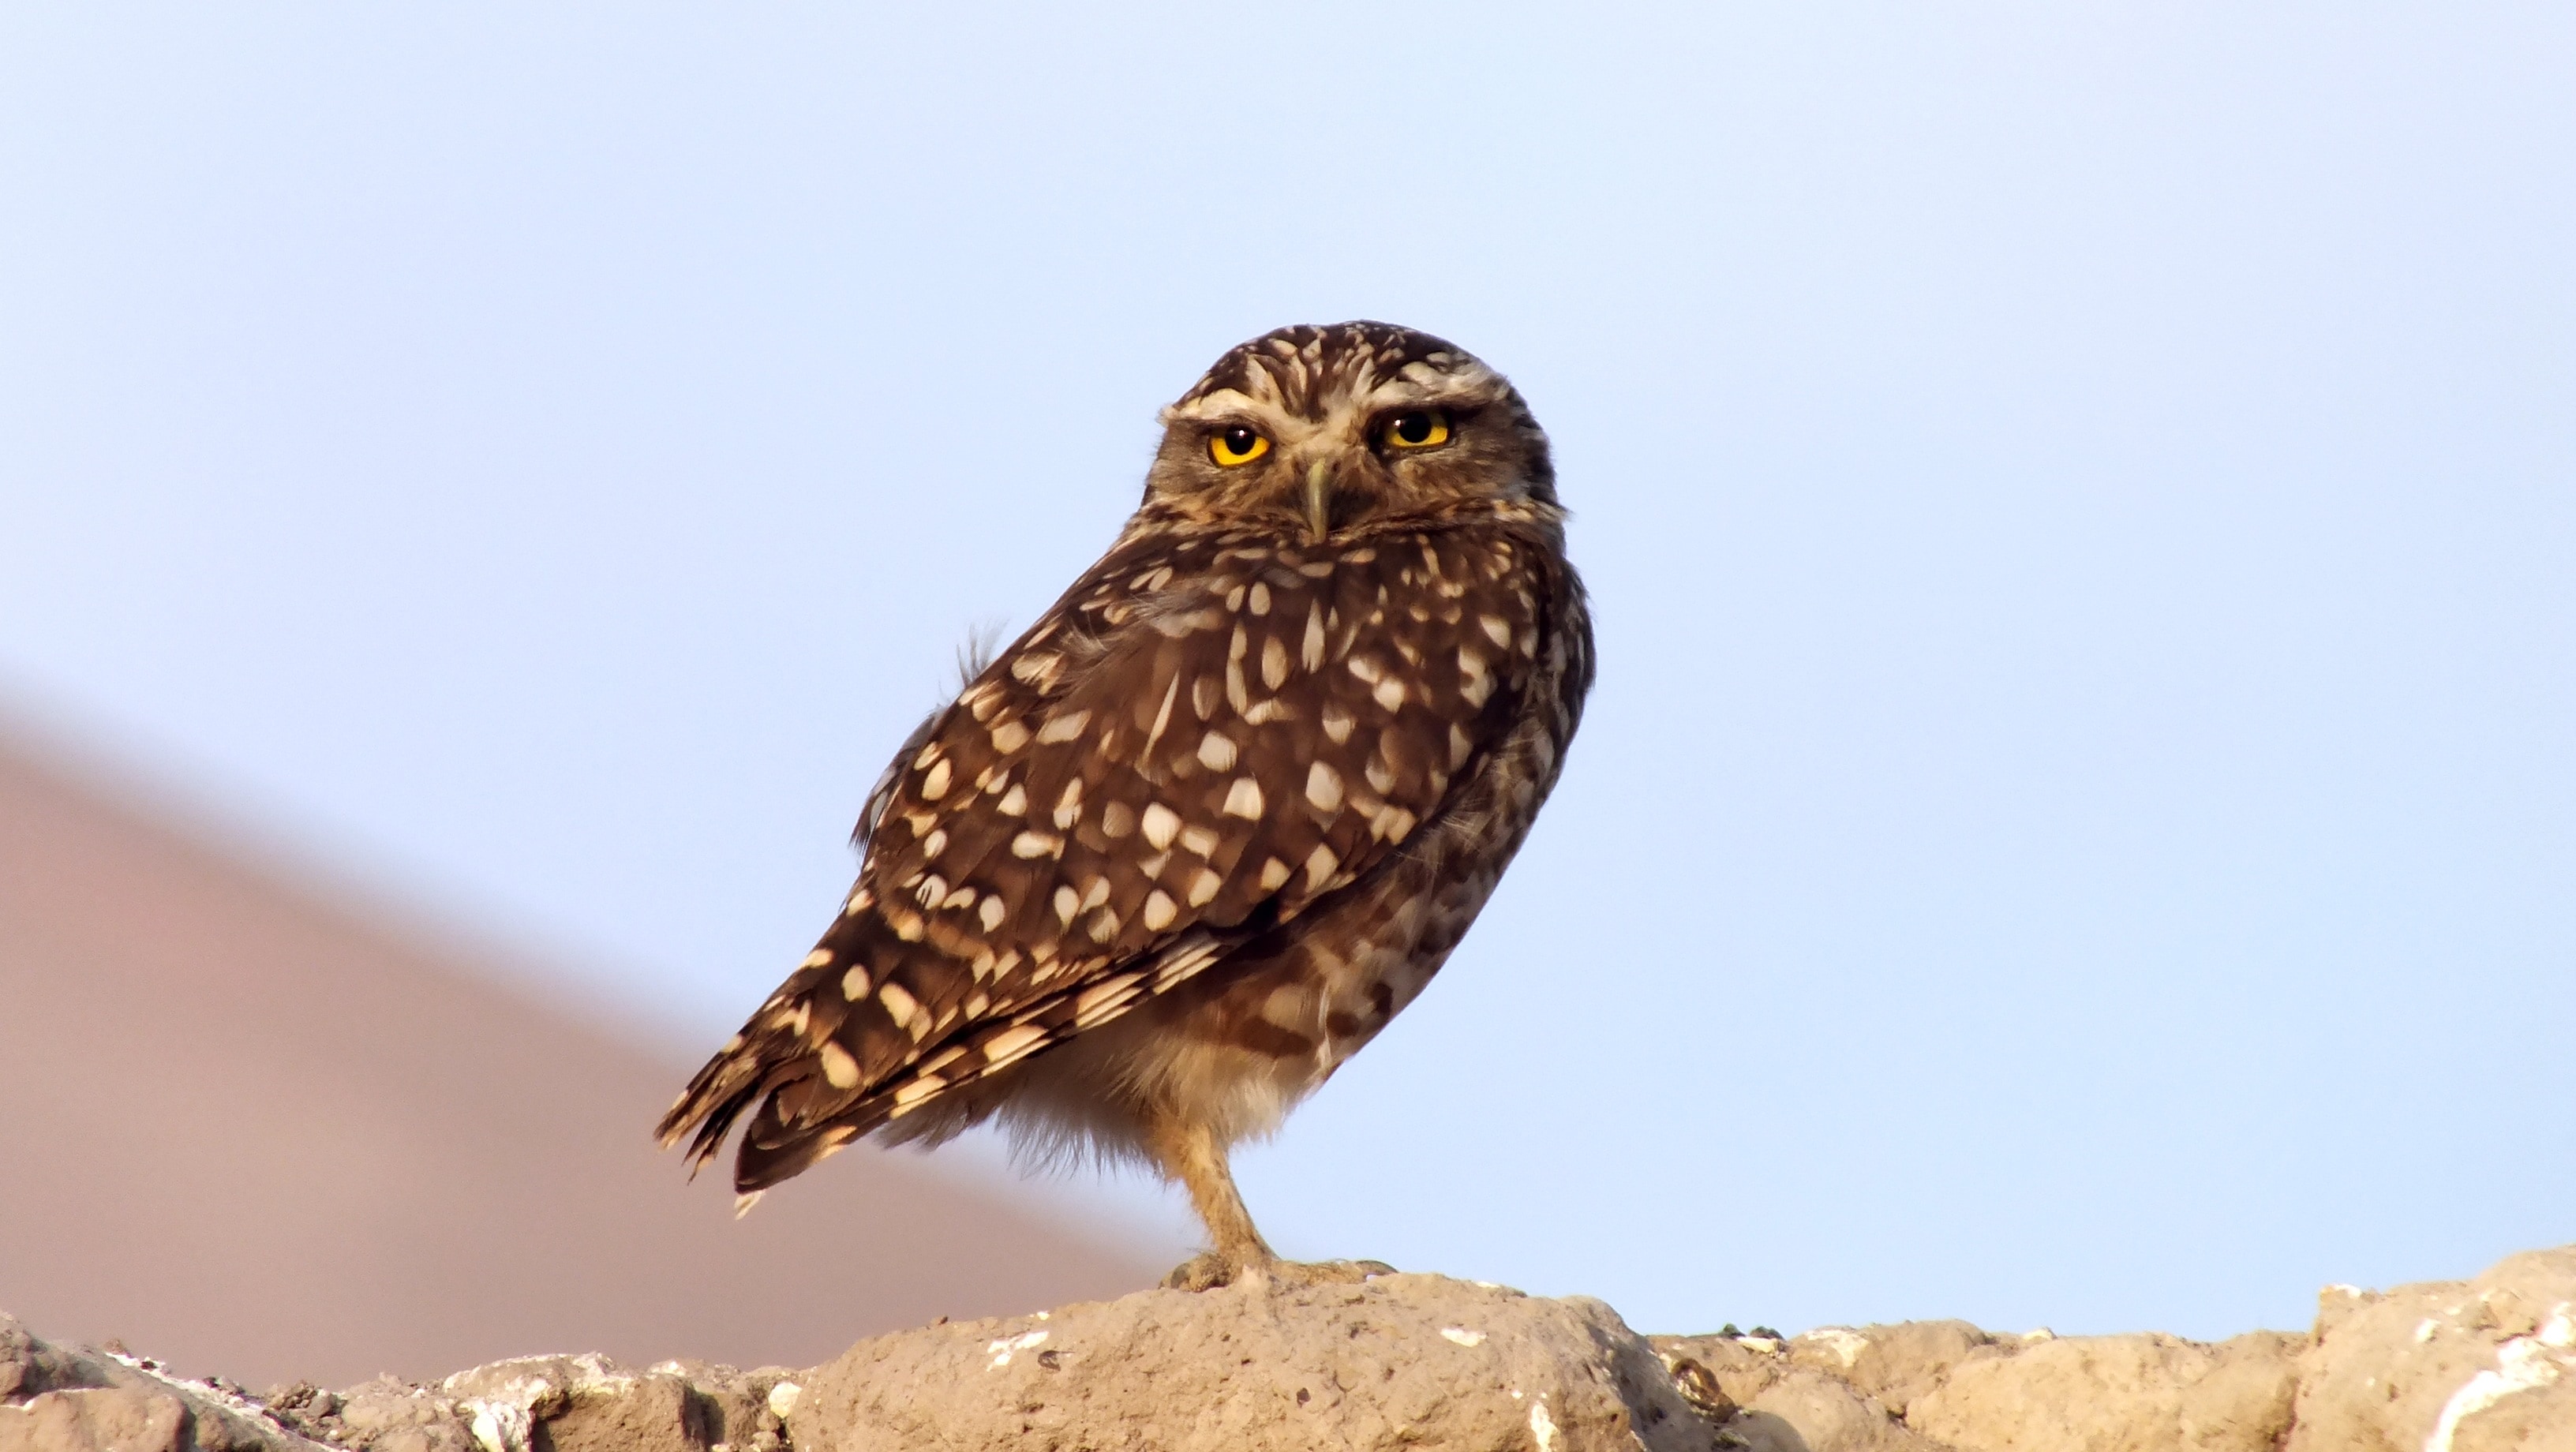 Desert, Chile, Owl, one animal, animal wildlife